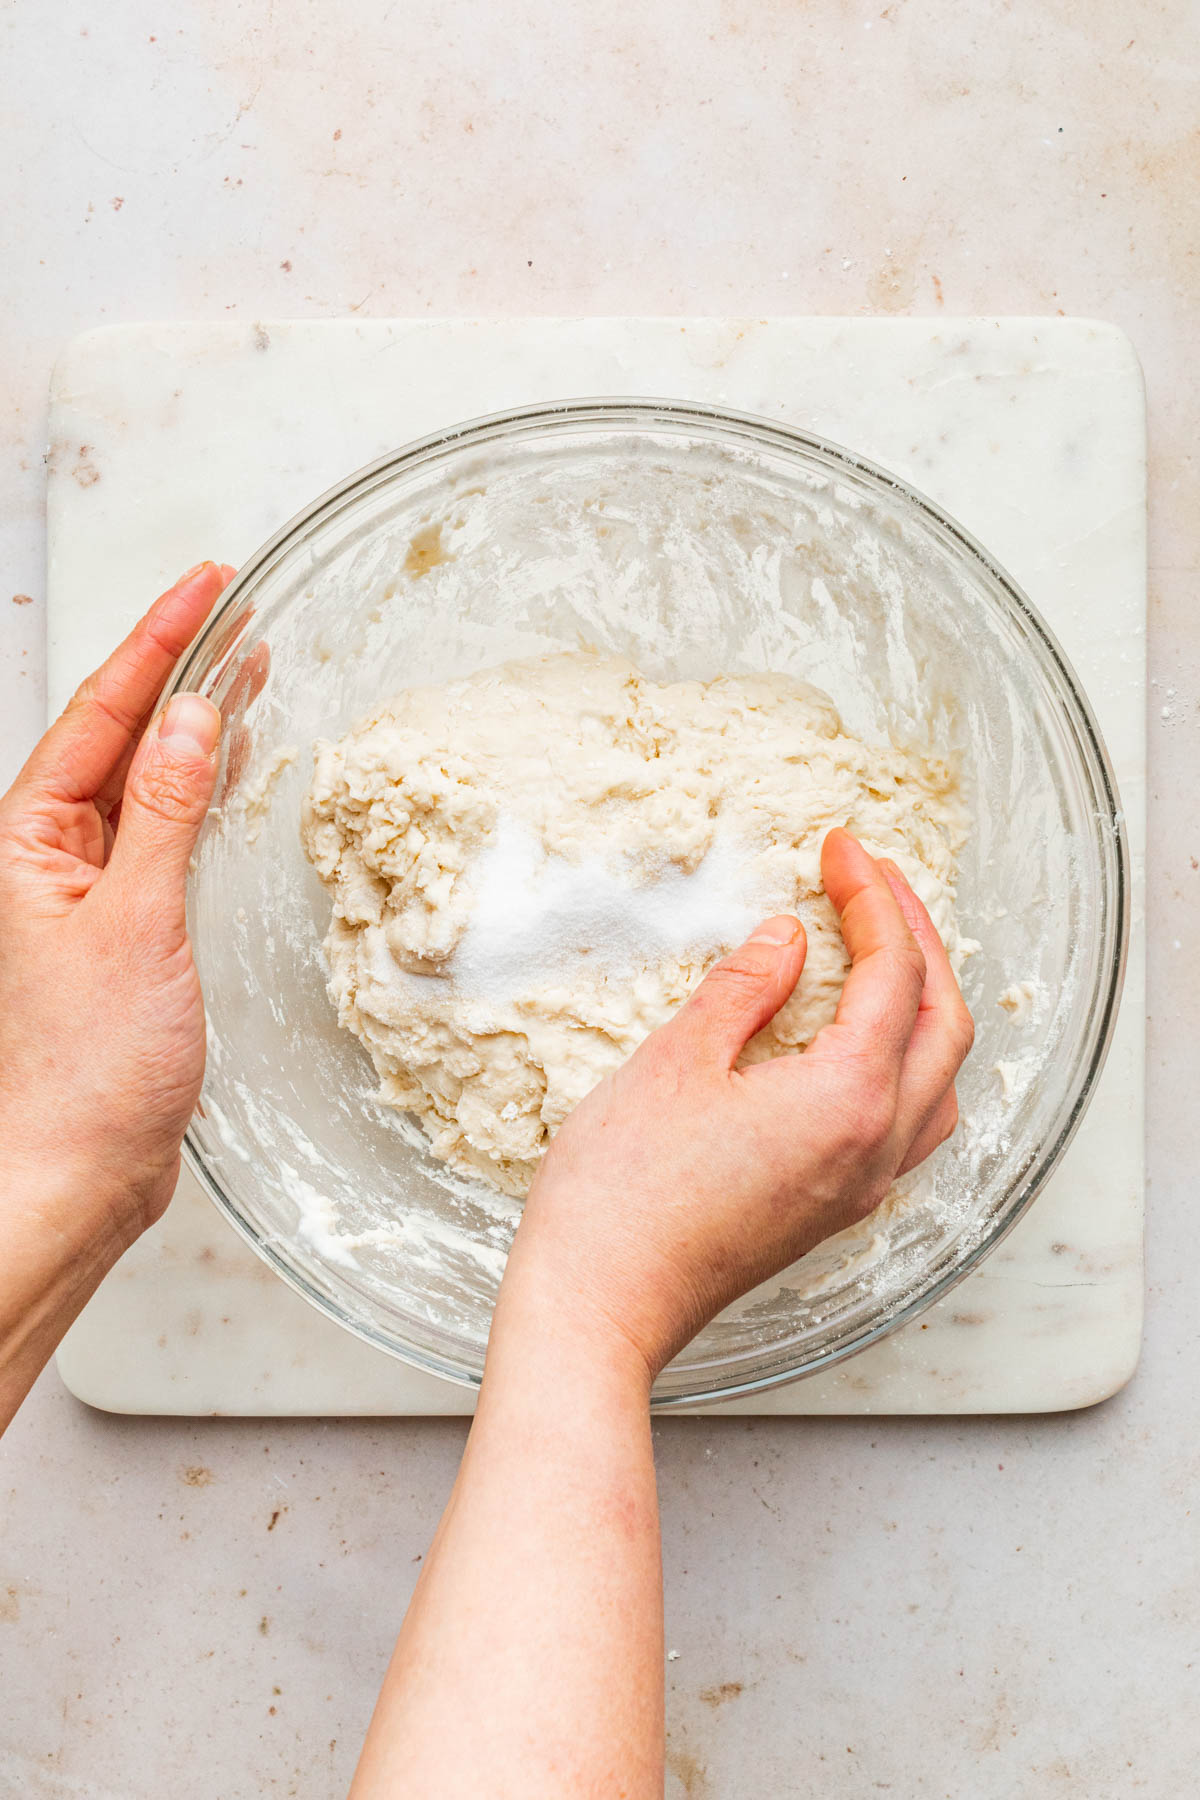 A hand mixing salt into a bowl of dough.